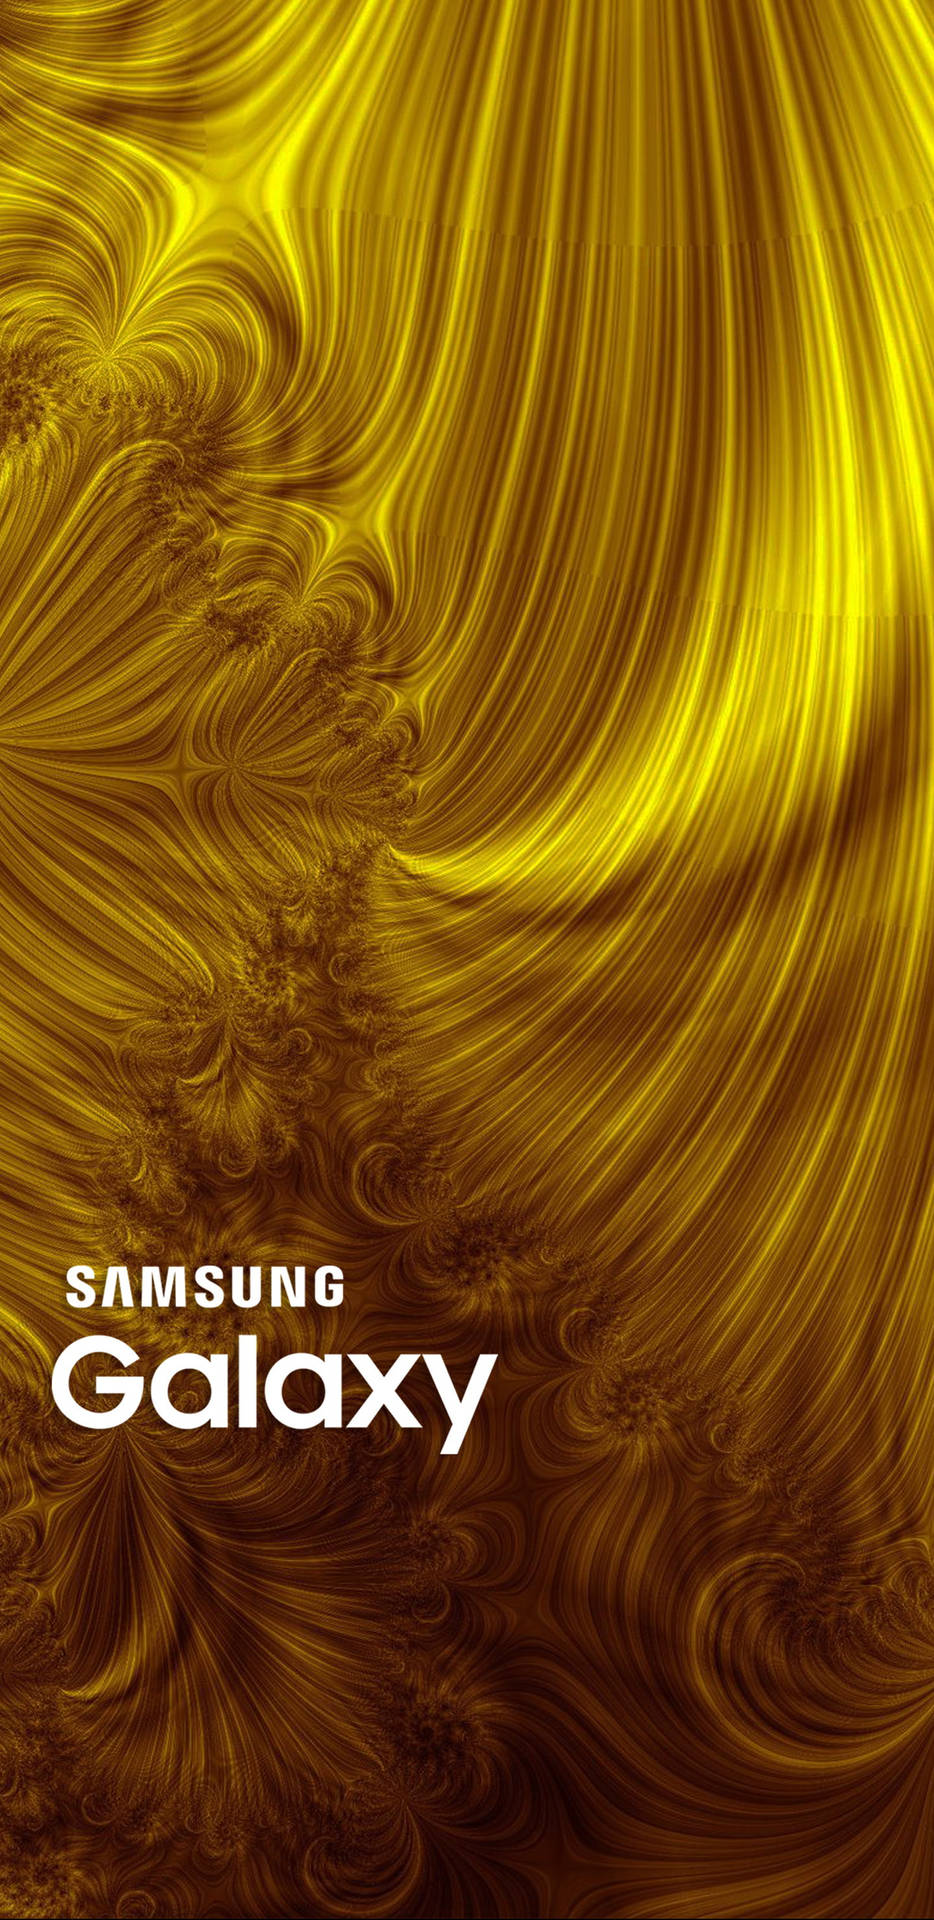 Samsung Galaxy Abstract Gold Fractal Wallpaper